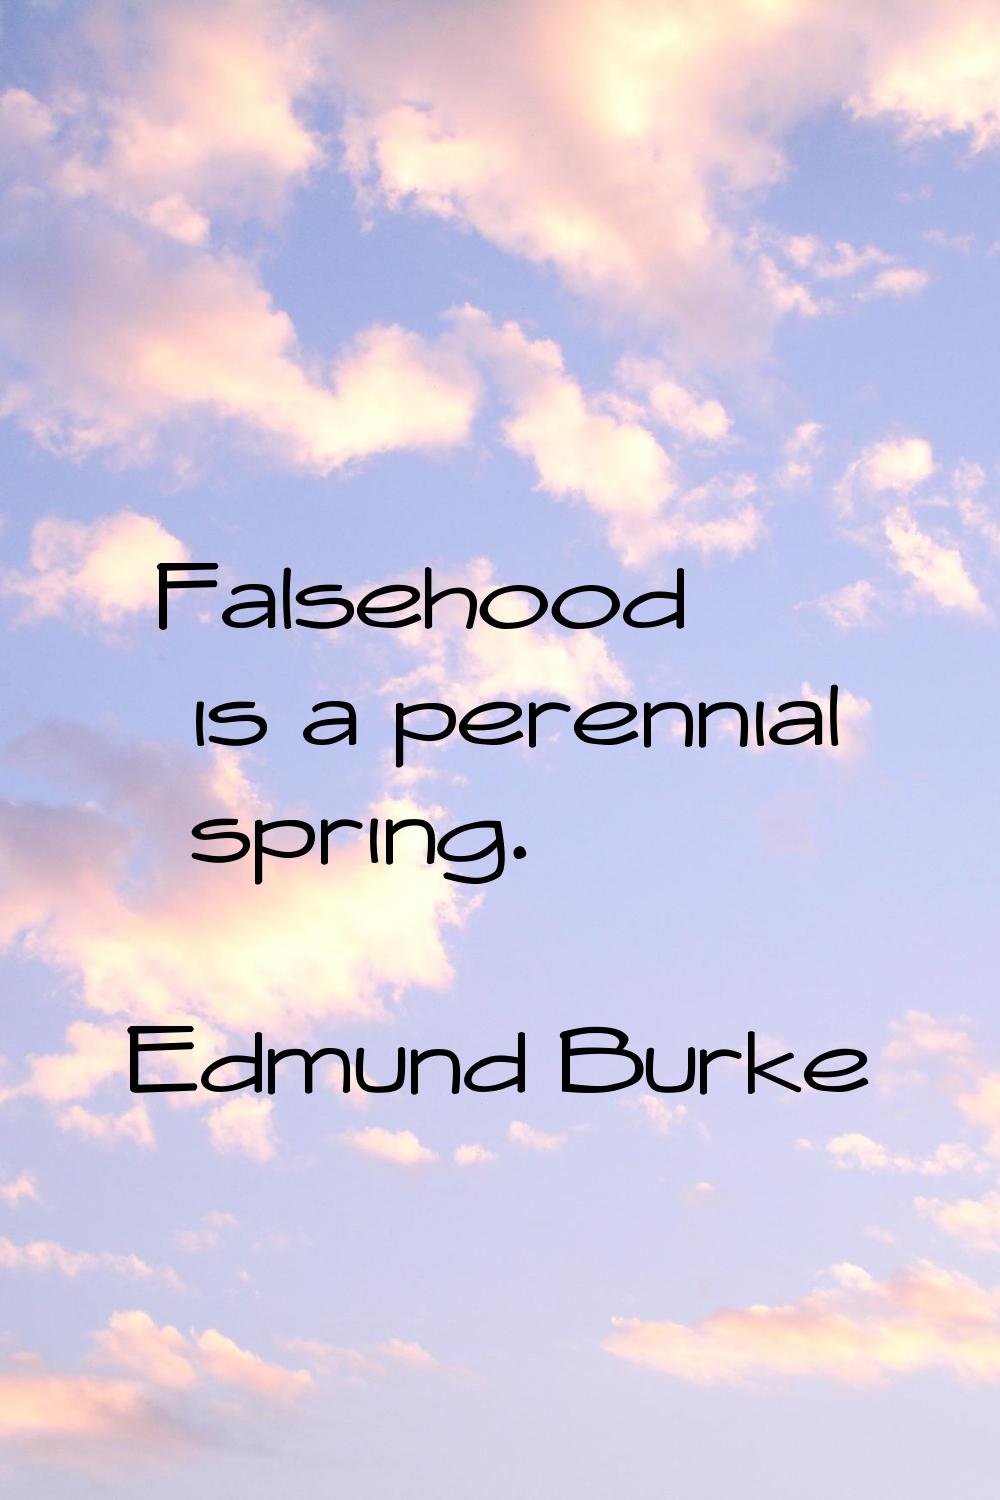 Falsehood is a perennial spring.